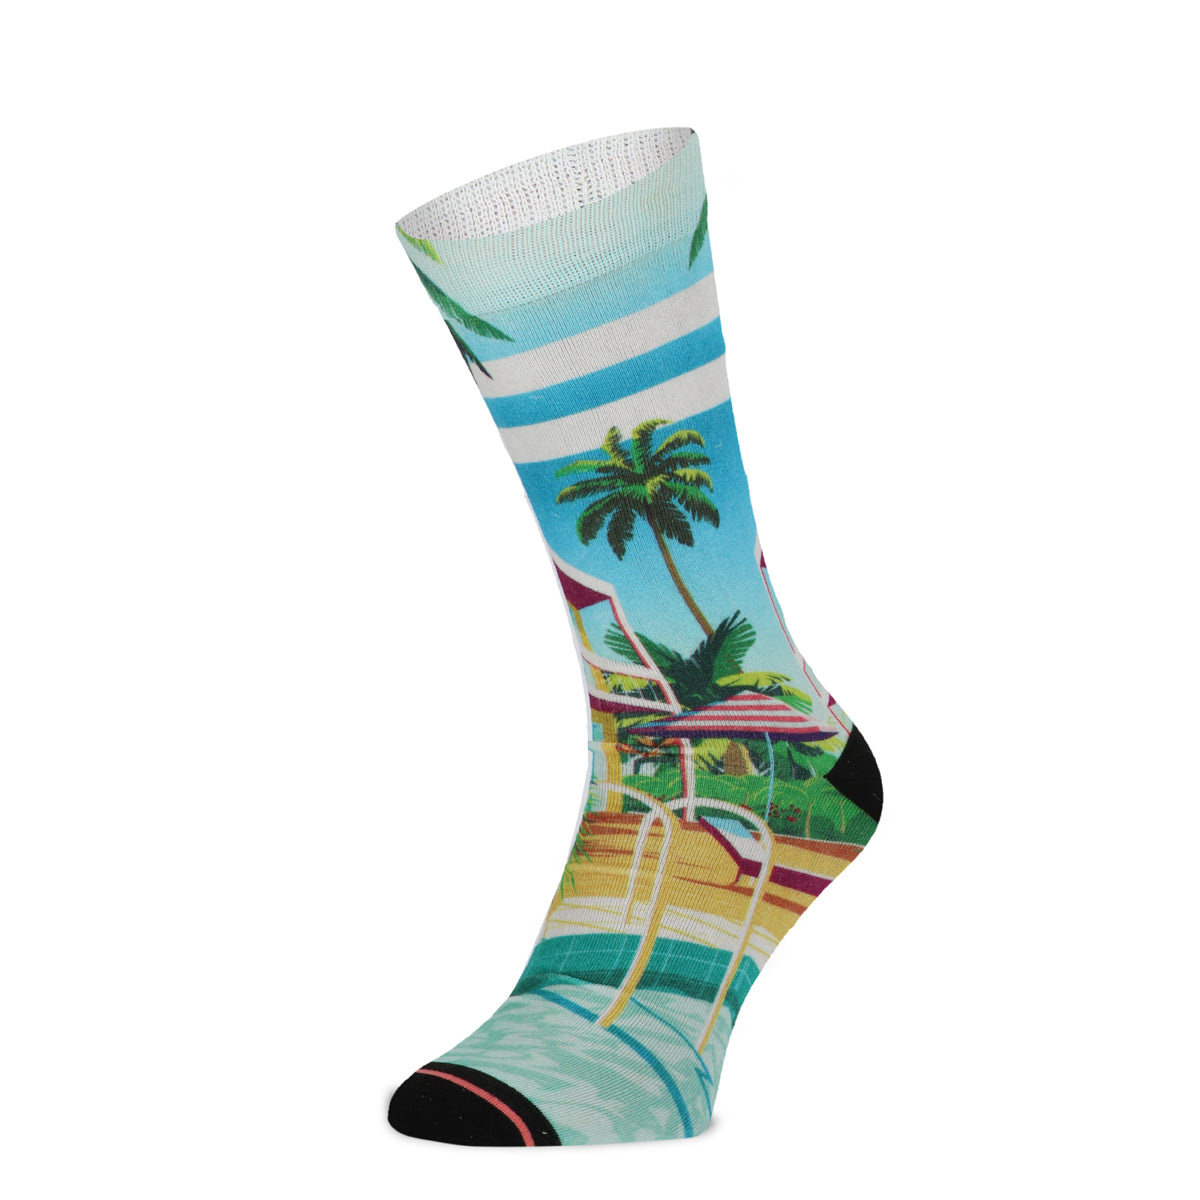 Bahamas Bamboo men's socks